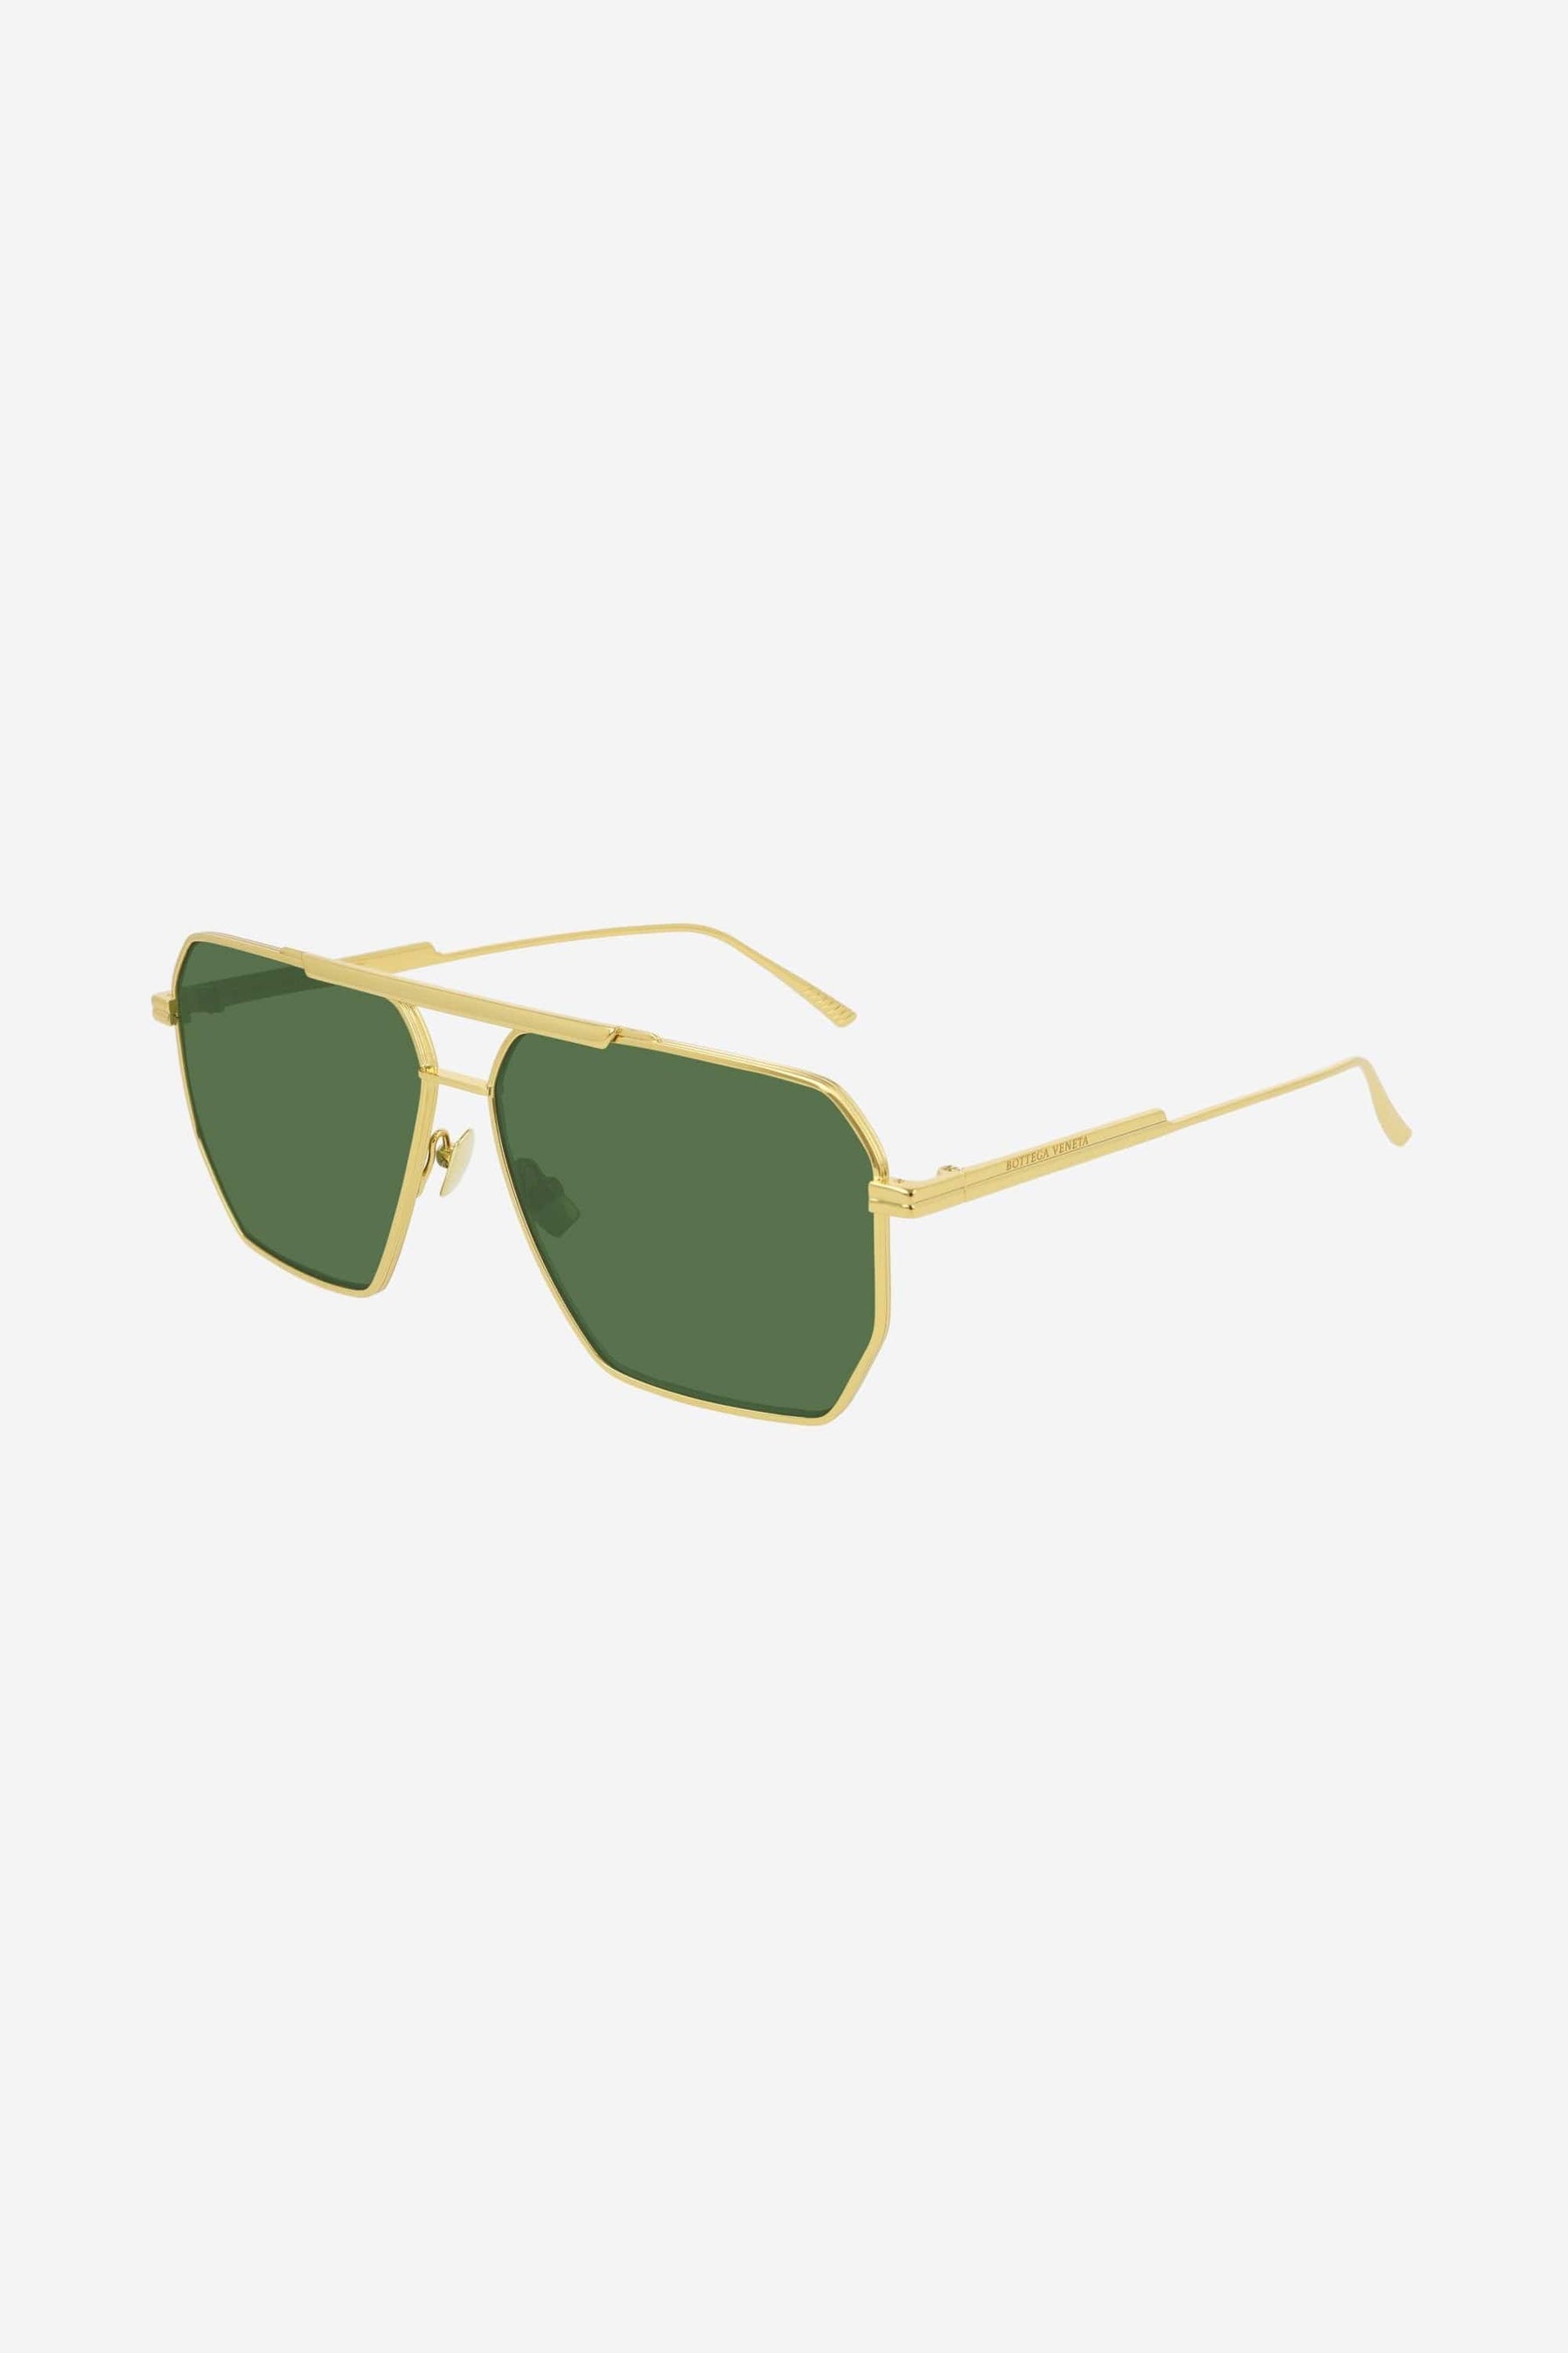 Bottega Veneta UNISEX super light caravan gold green sunglasses - Eyewear Club